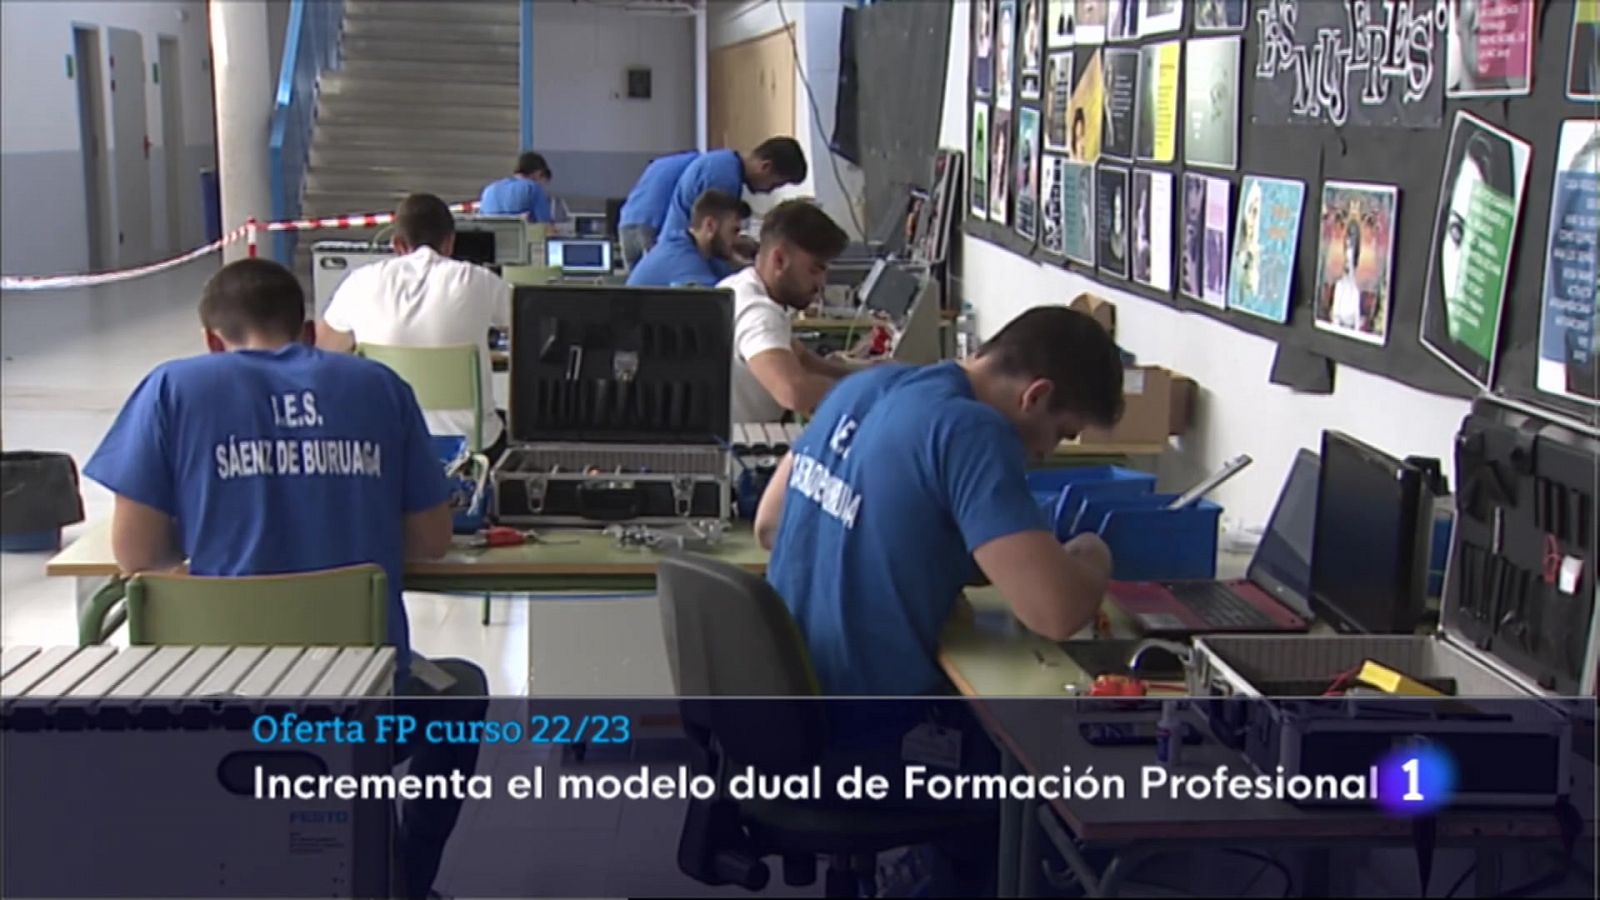 Oferta FP Extremadura curso 22/23 - RTVE.es